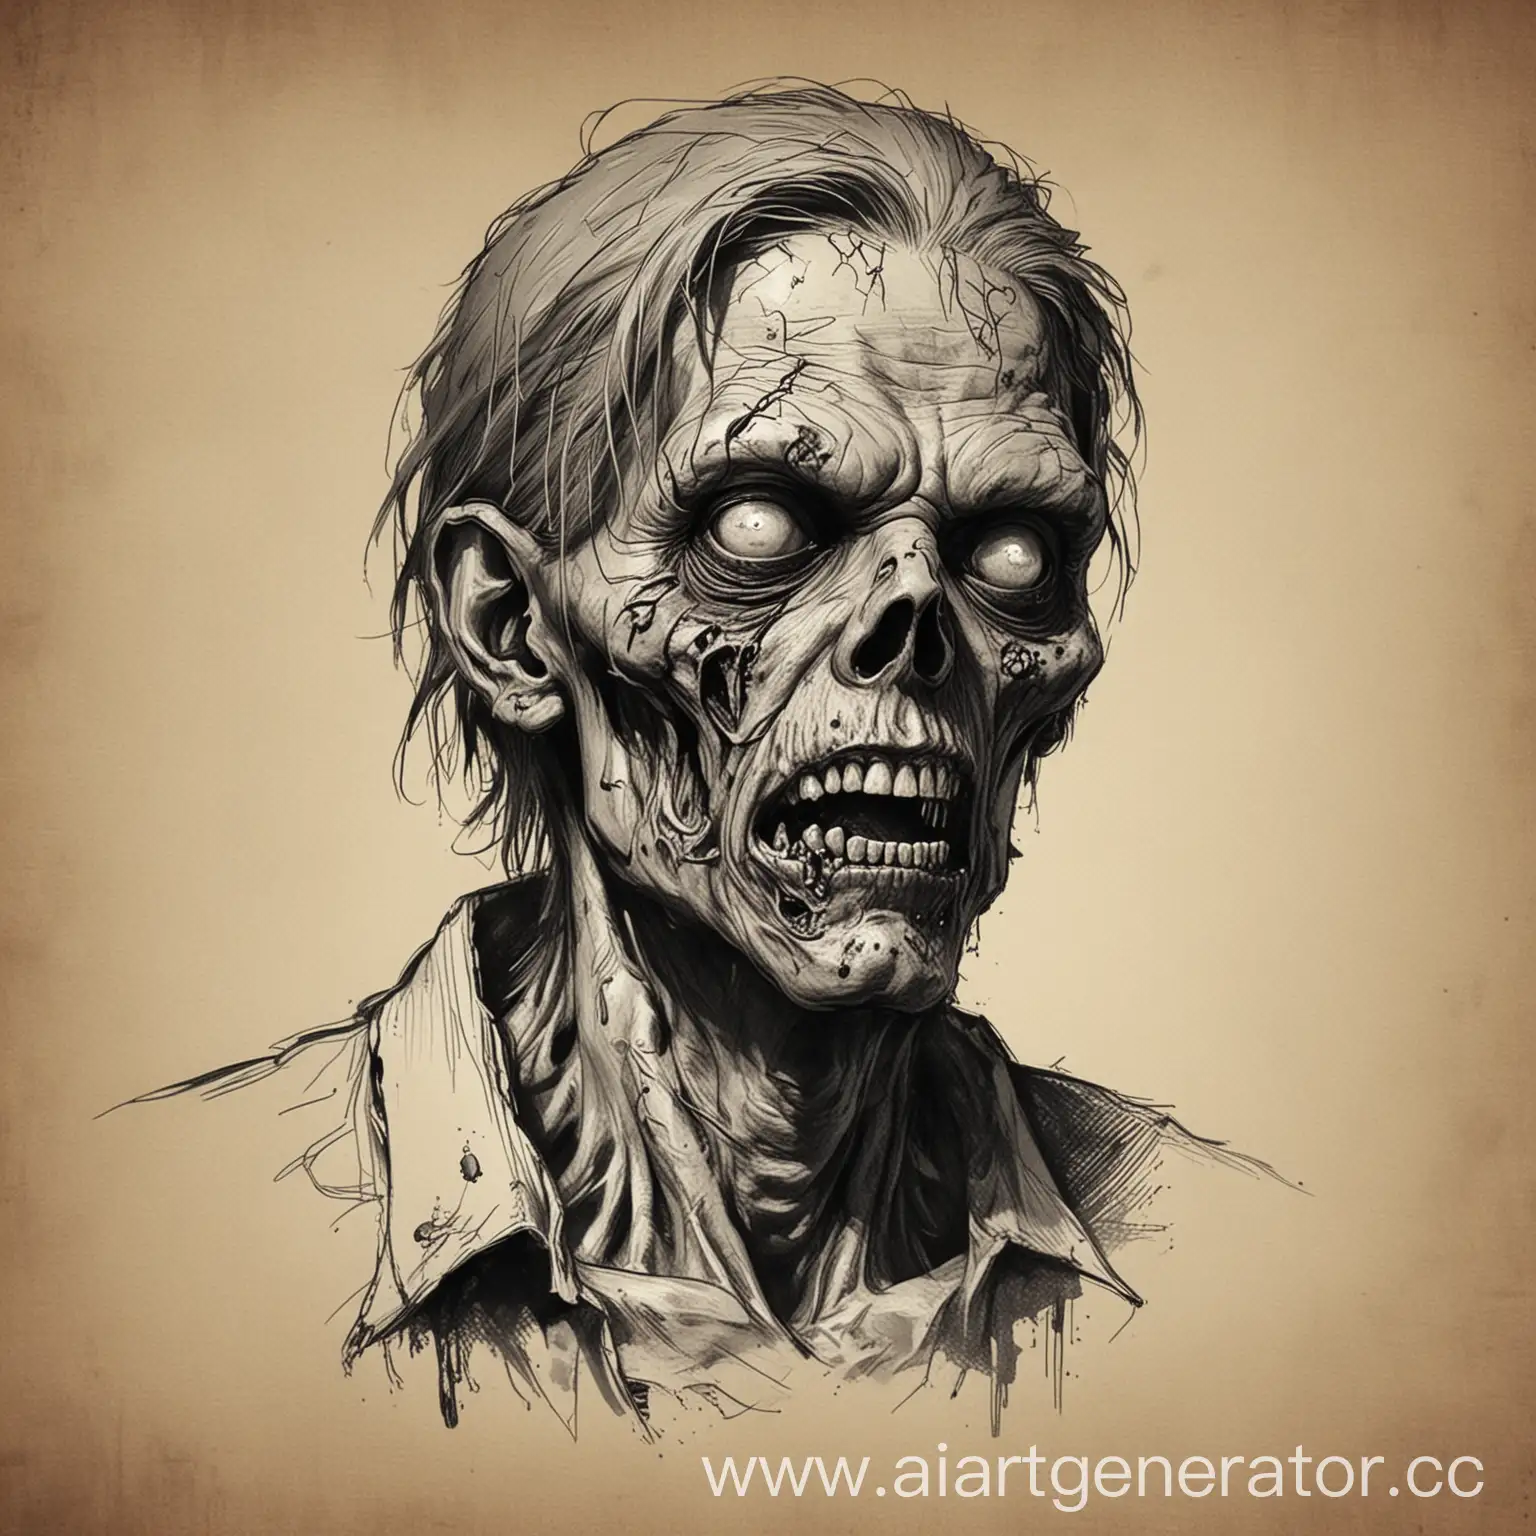 
Zombie sketch style 